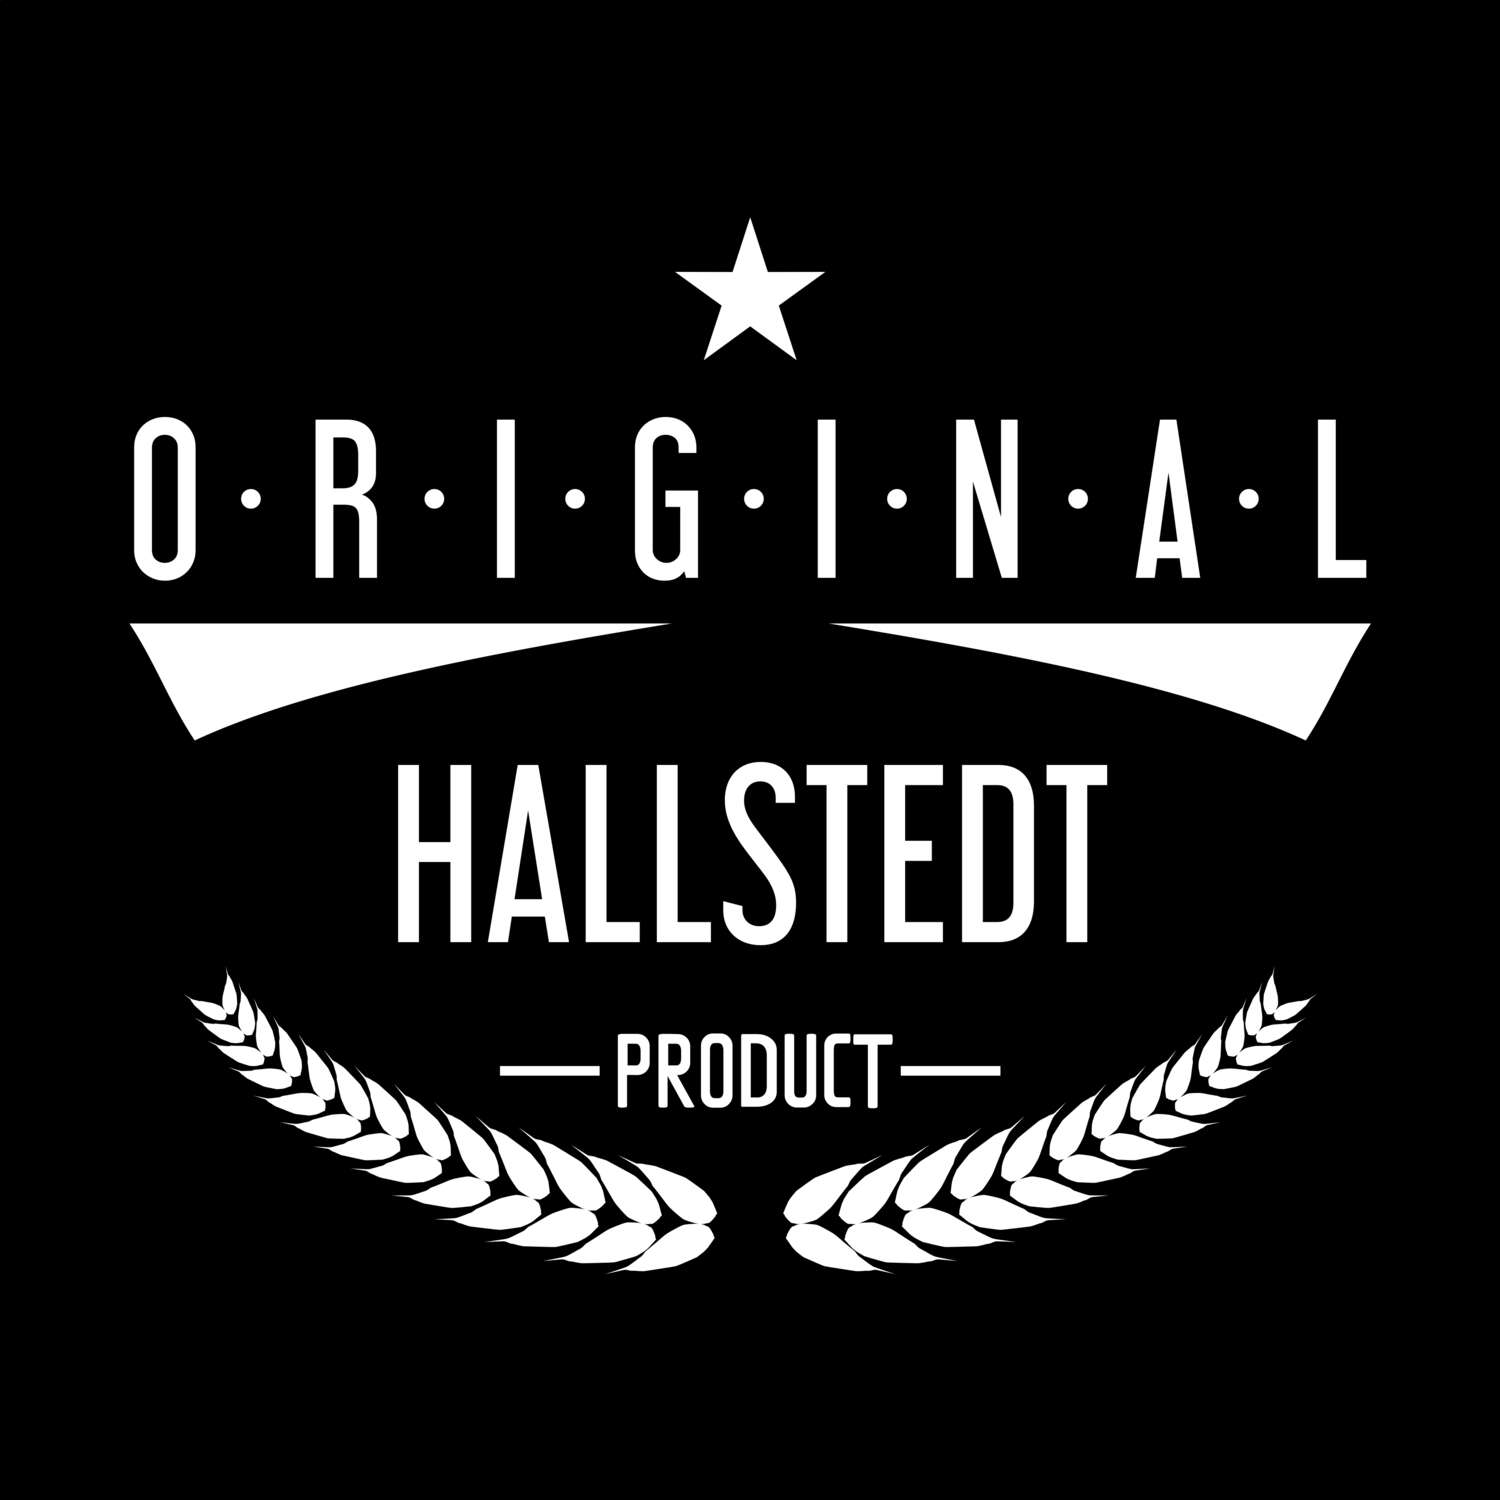 Hallstedt T-Shirt »Original Product«